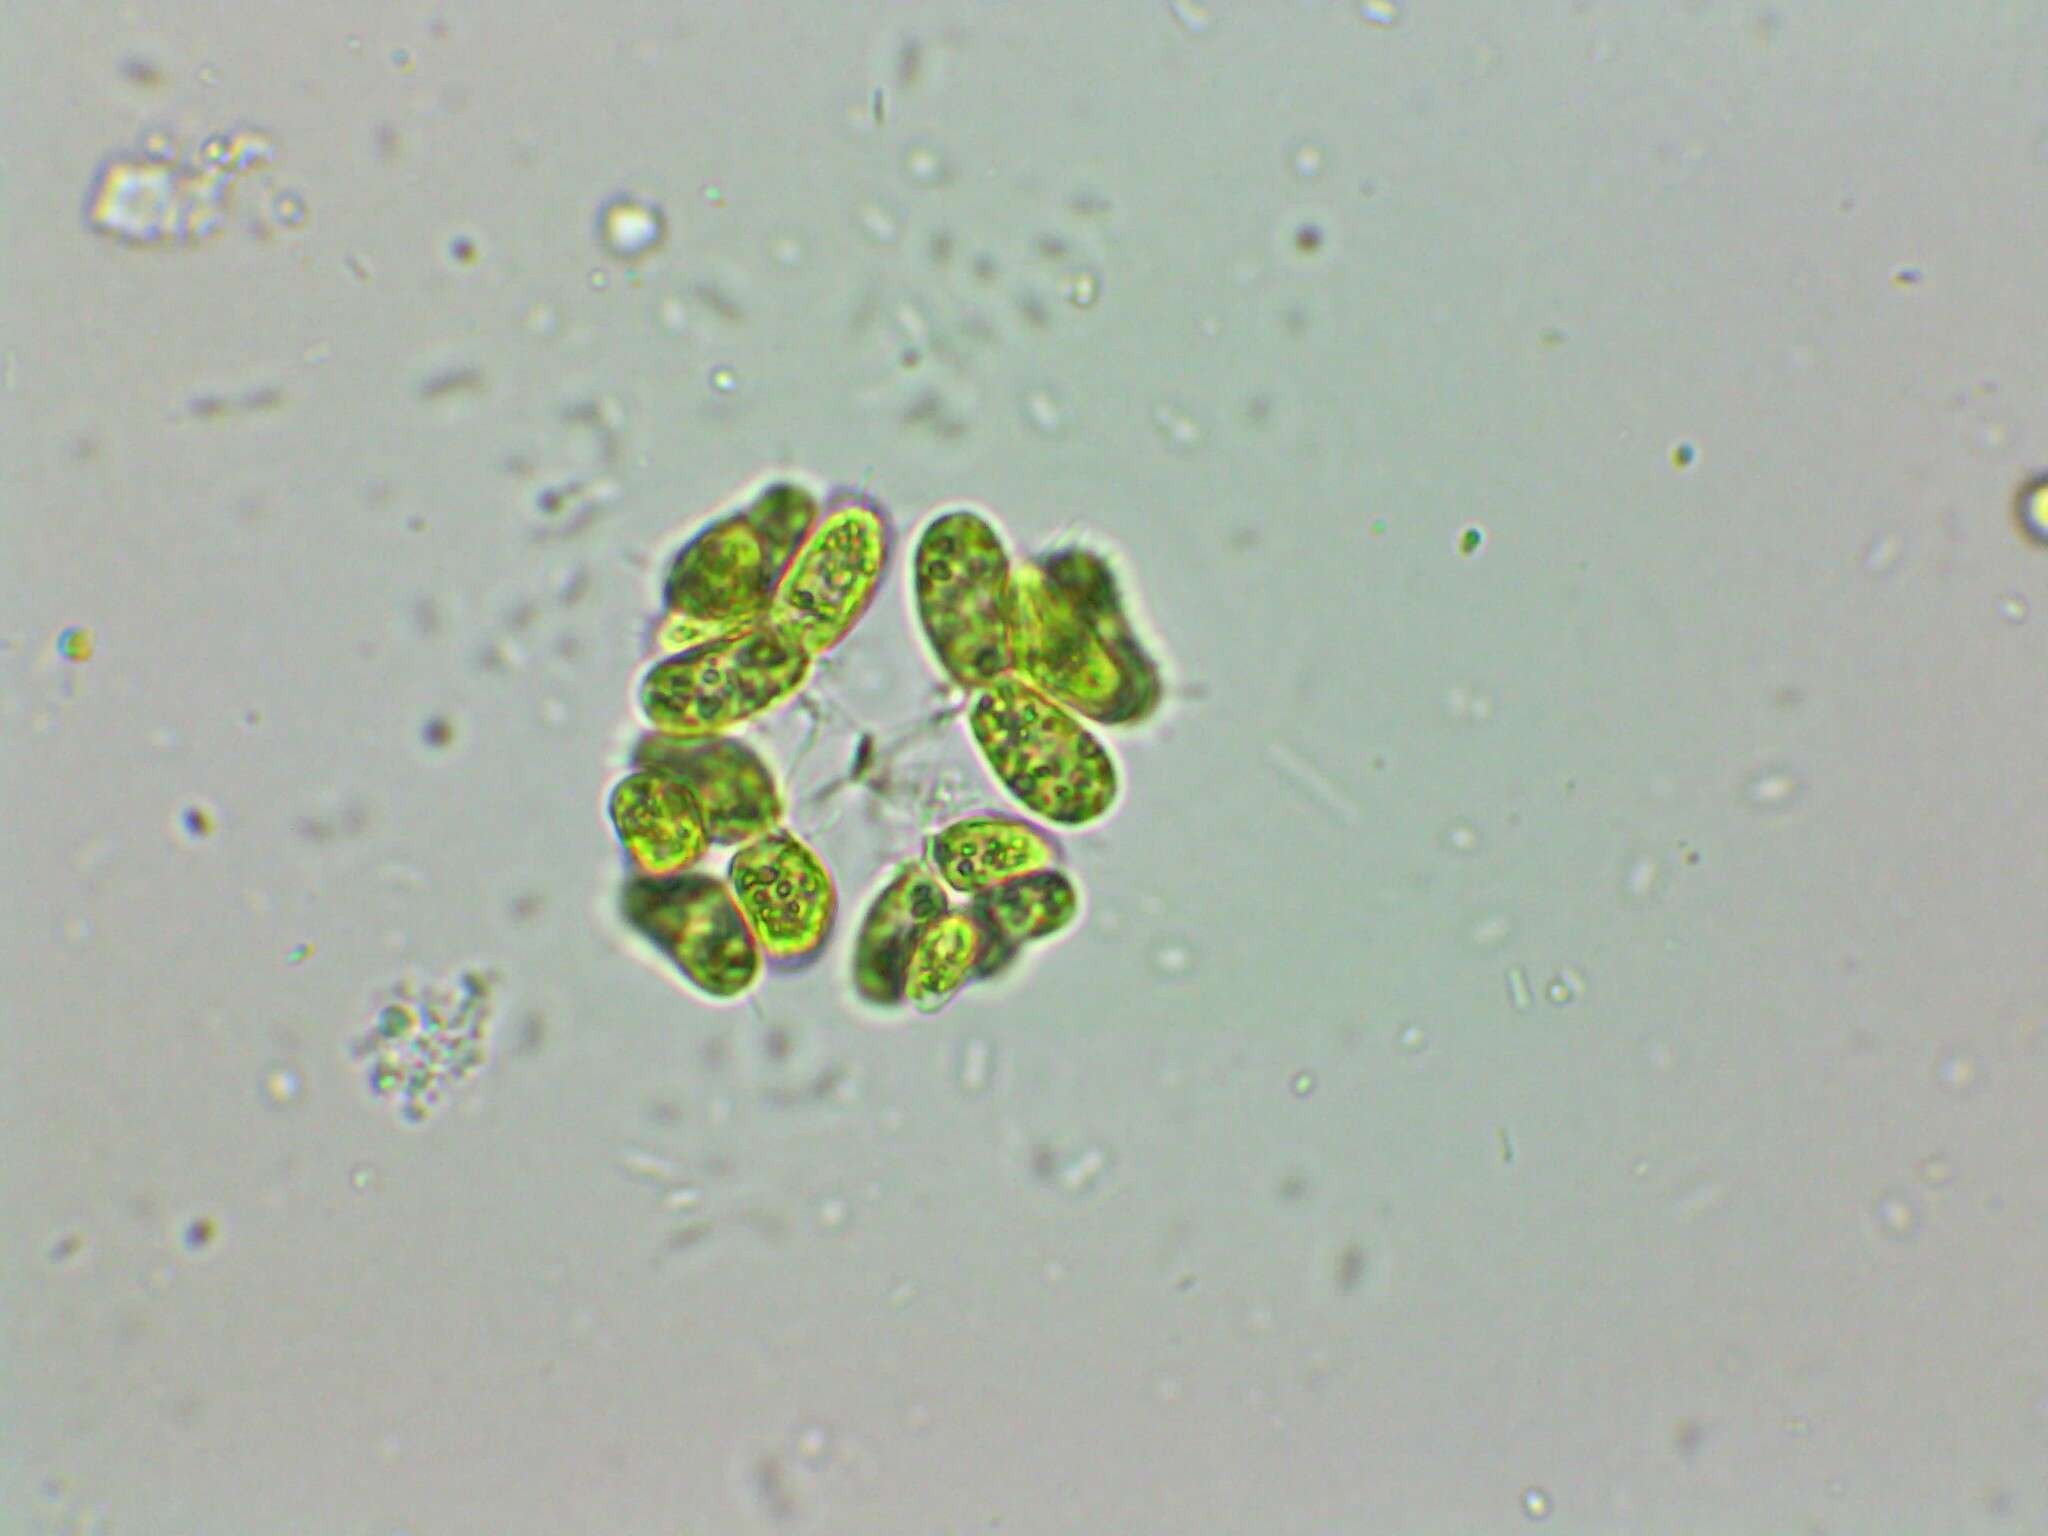 Plancia ëd Dimorphococcus Braun 1855